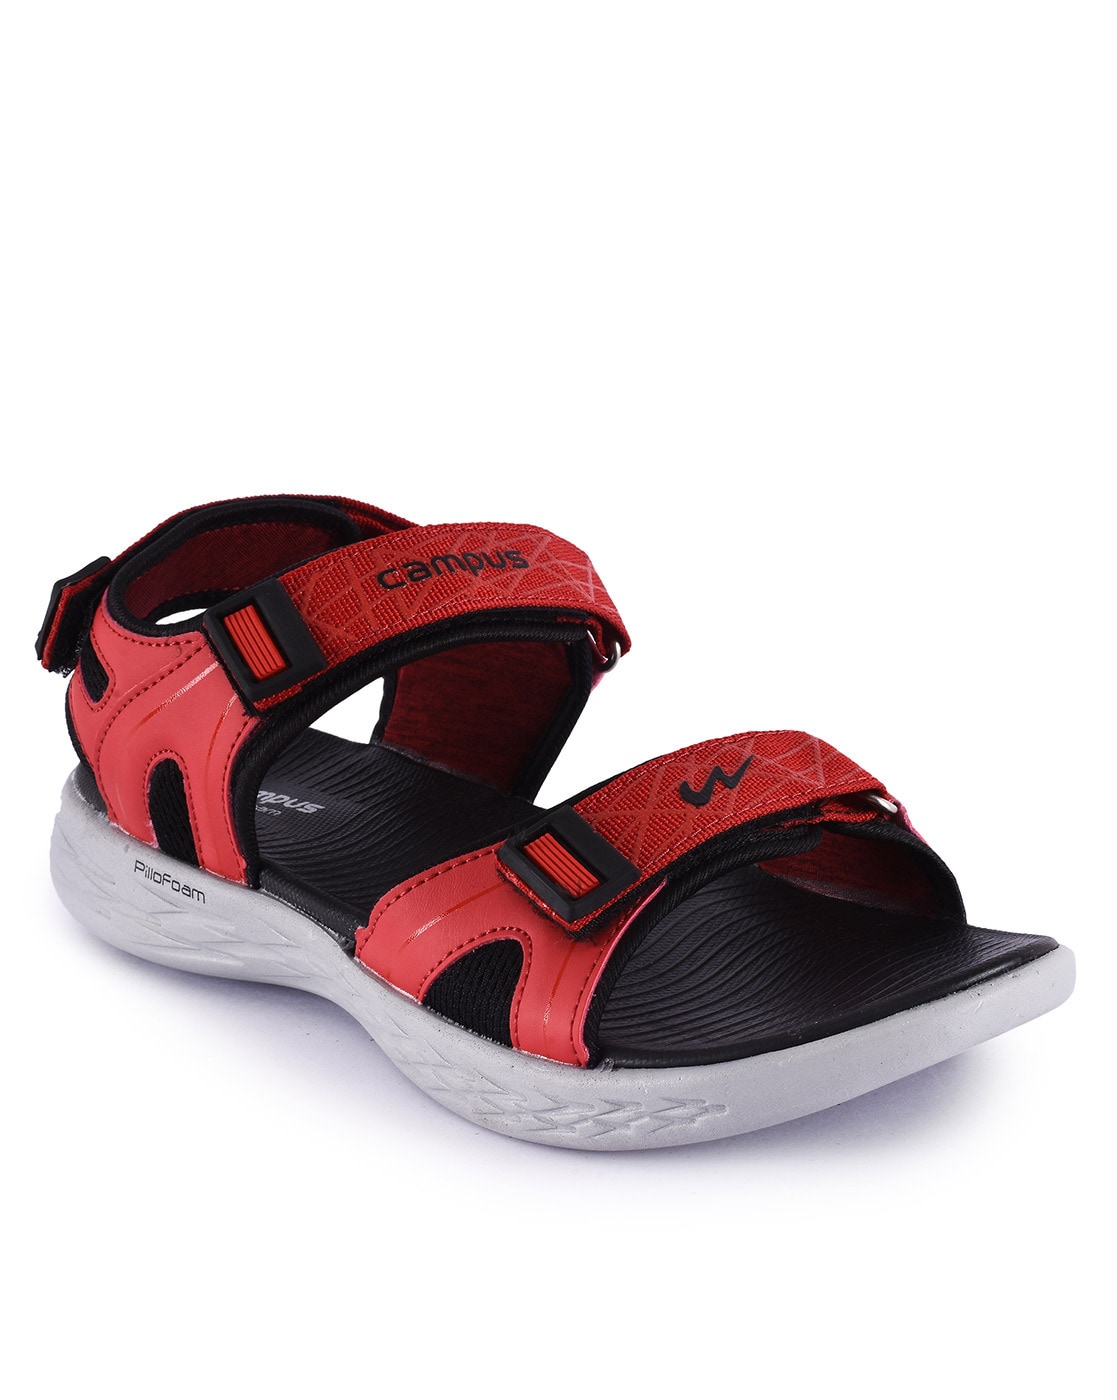 Buy CAMPUS Mesh Velcro Men's Sport Sandals | Shoppers Stop